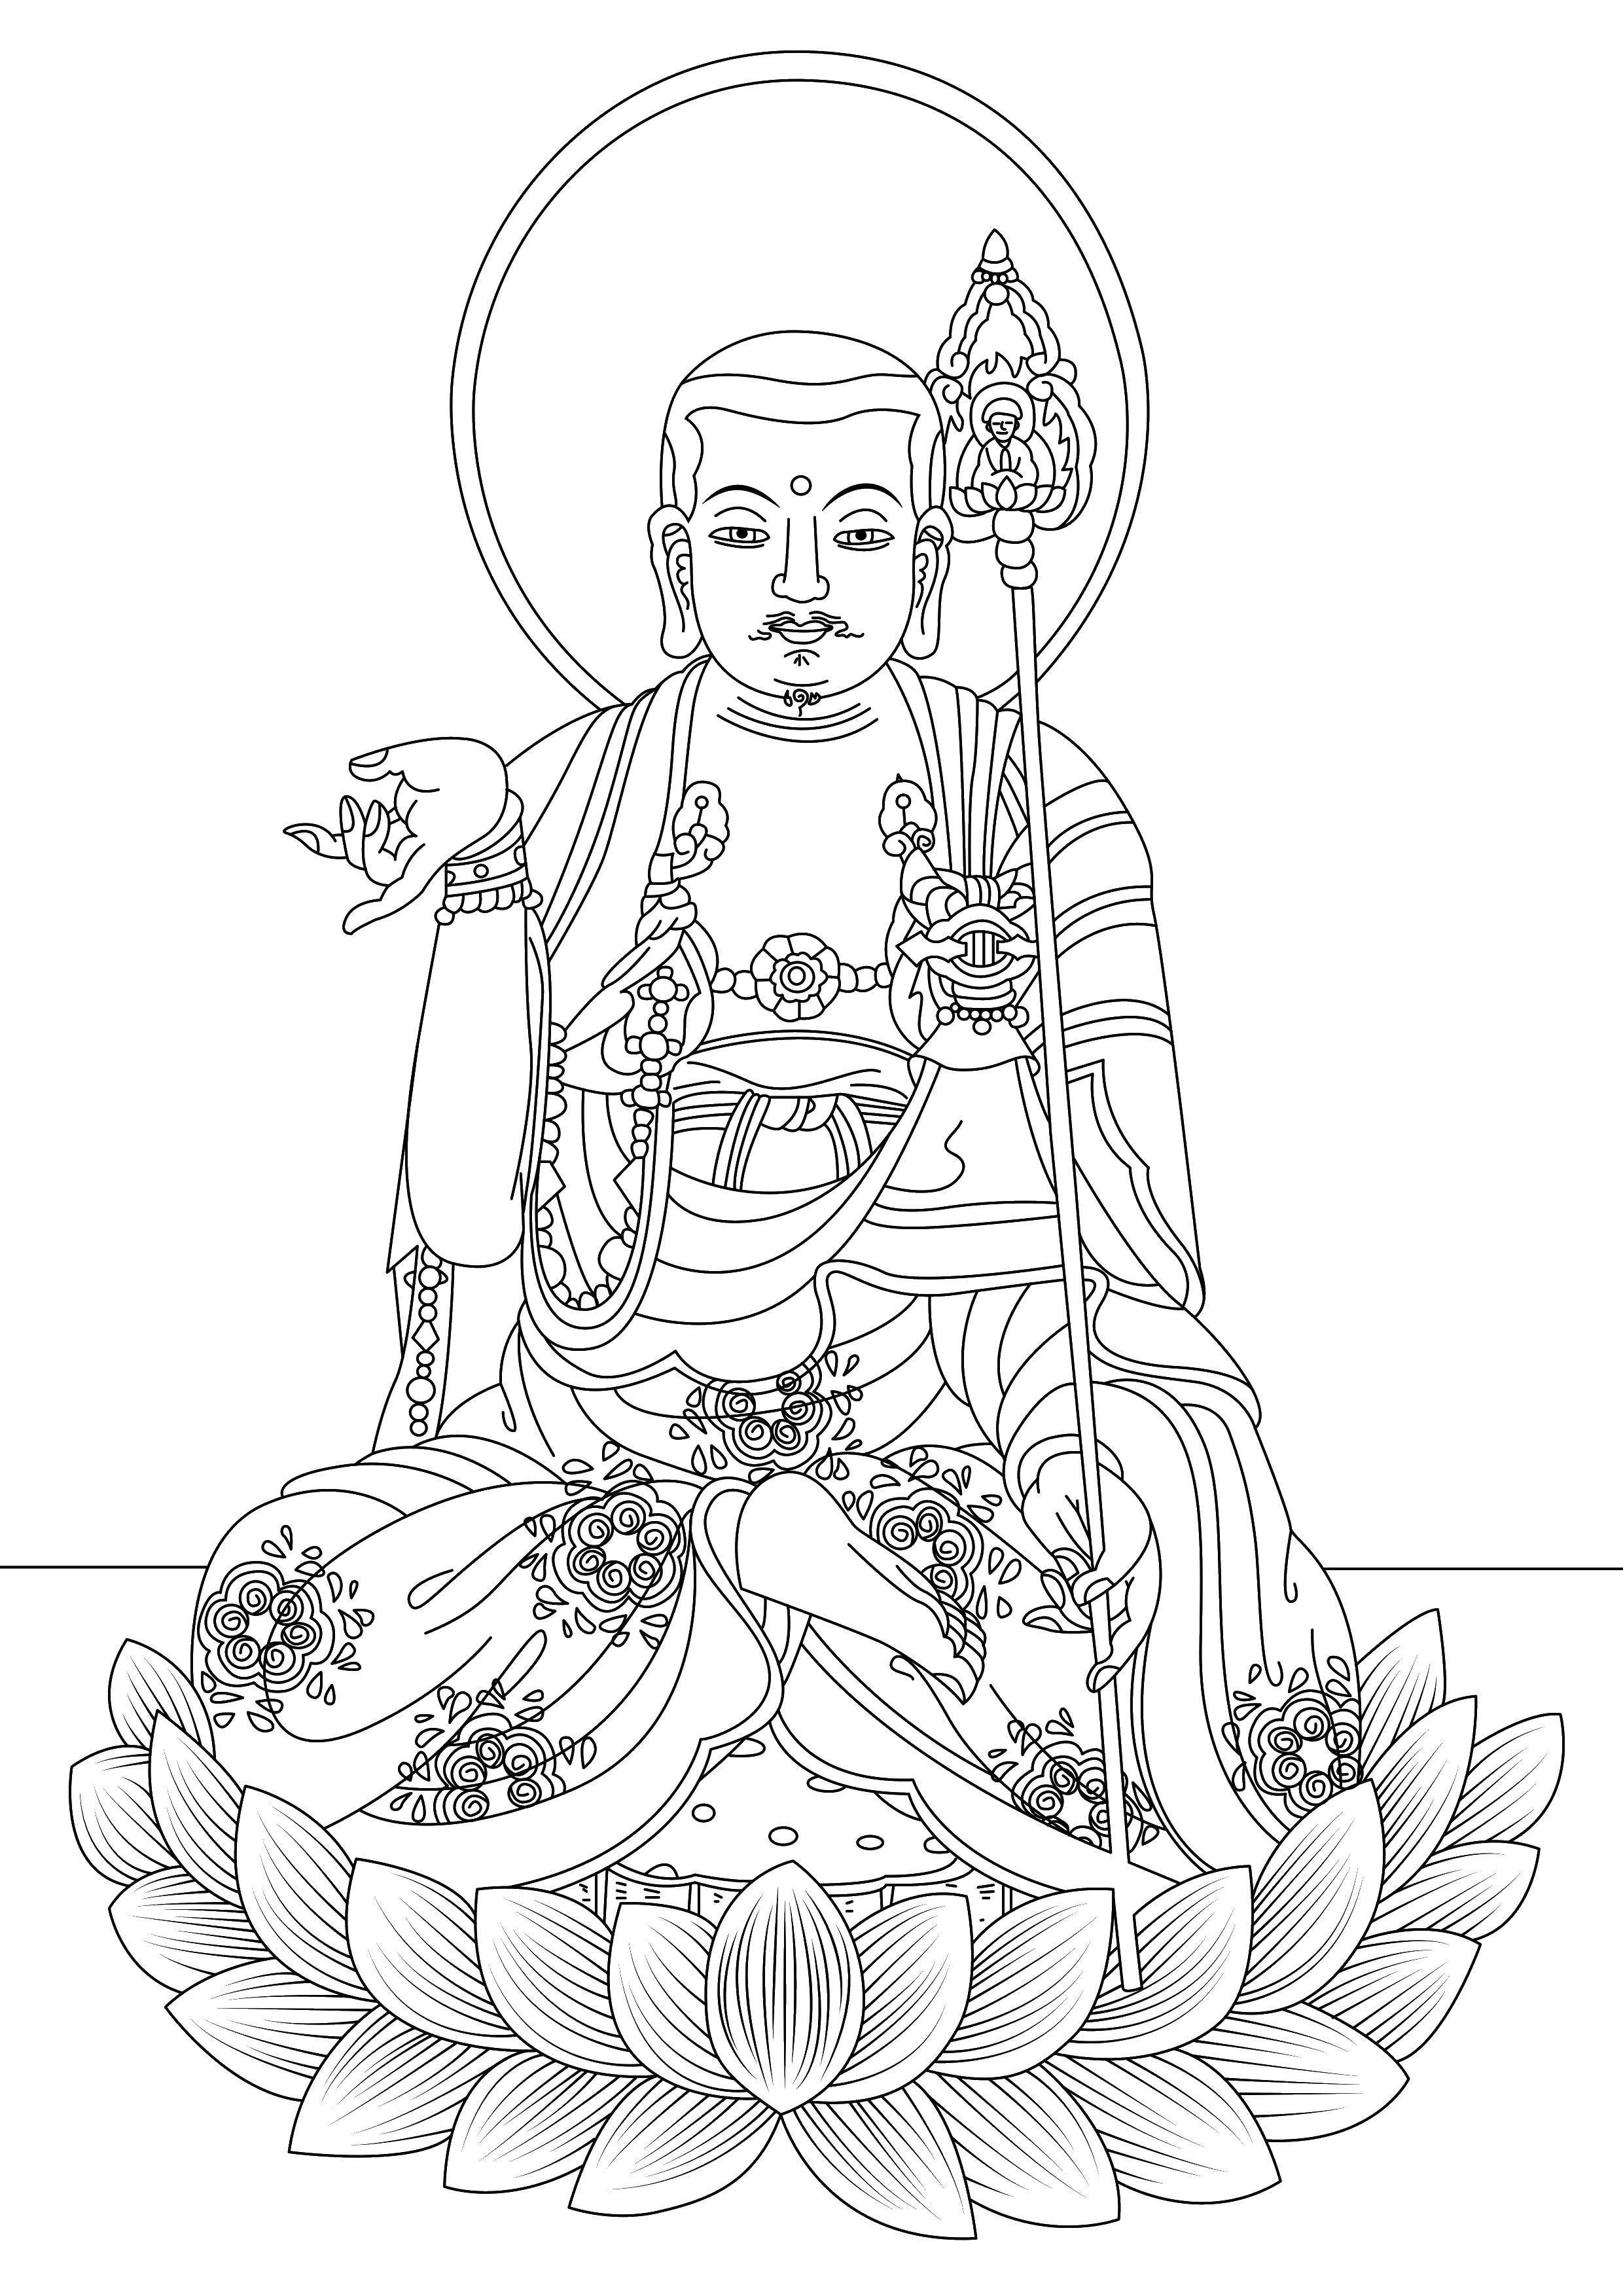 Coloring Buddha. Category religion. Tags:  Religion, prayer.